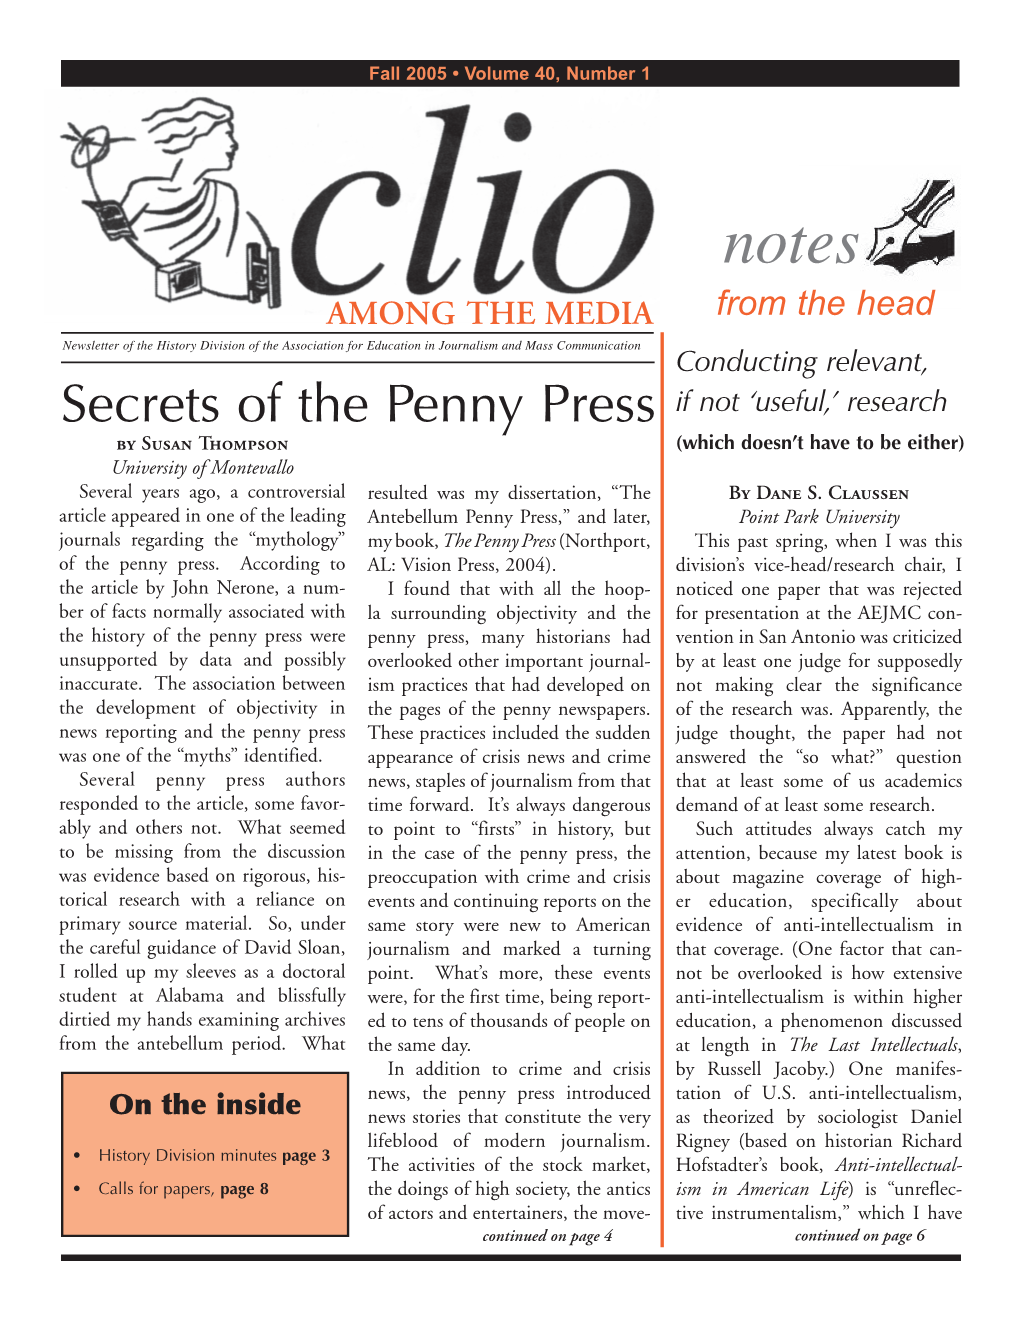 Secrets of the Penny Press